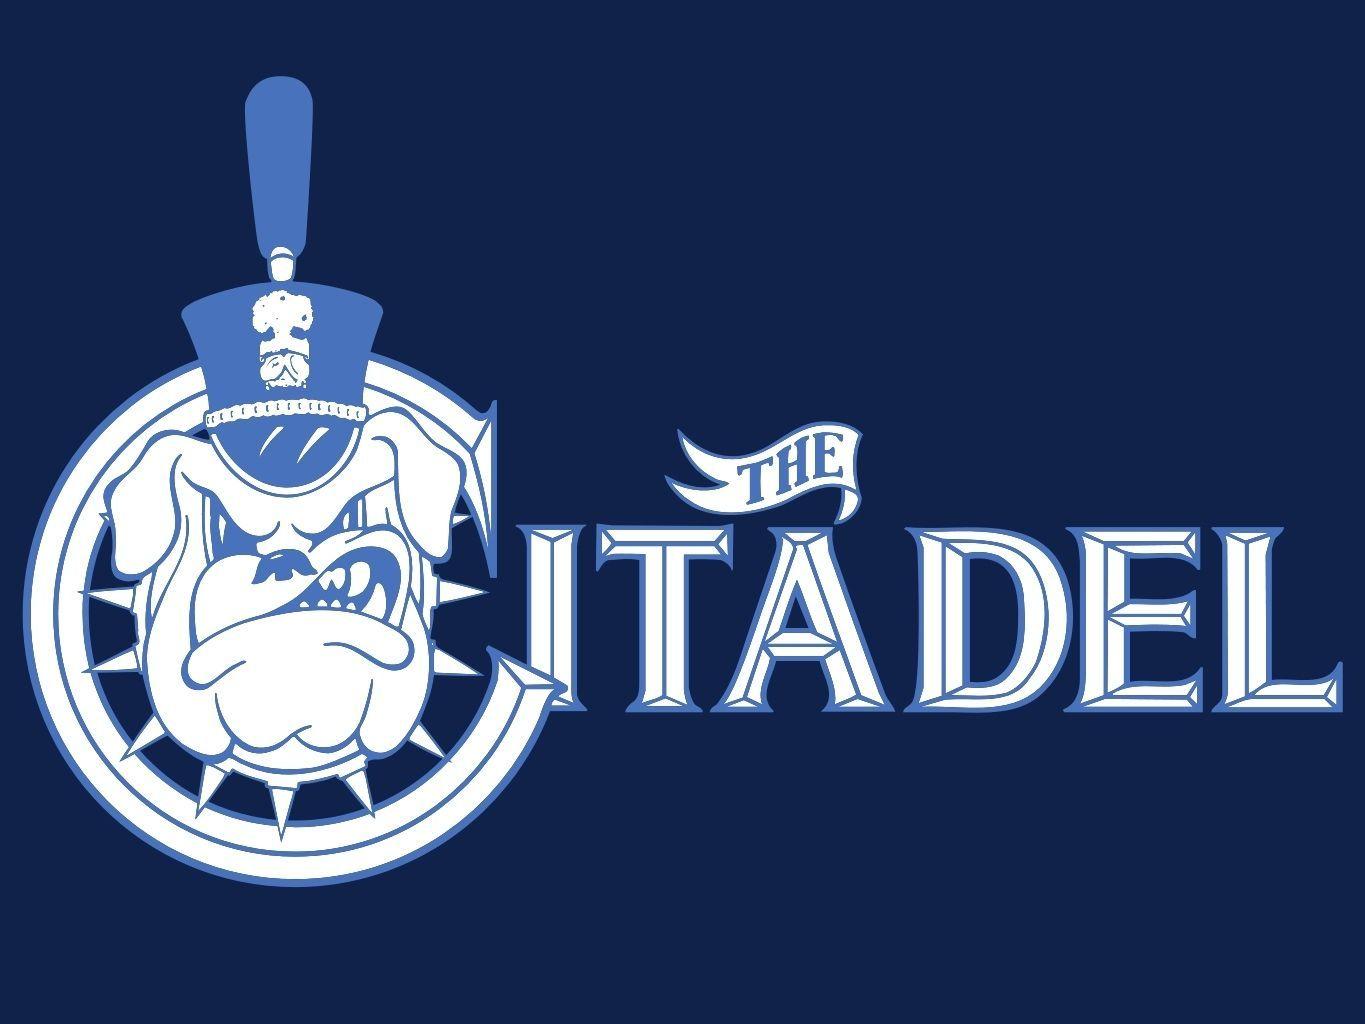 Citadel Logo - The Citadel (The Military College of South Carolina)- Bulldogs